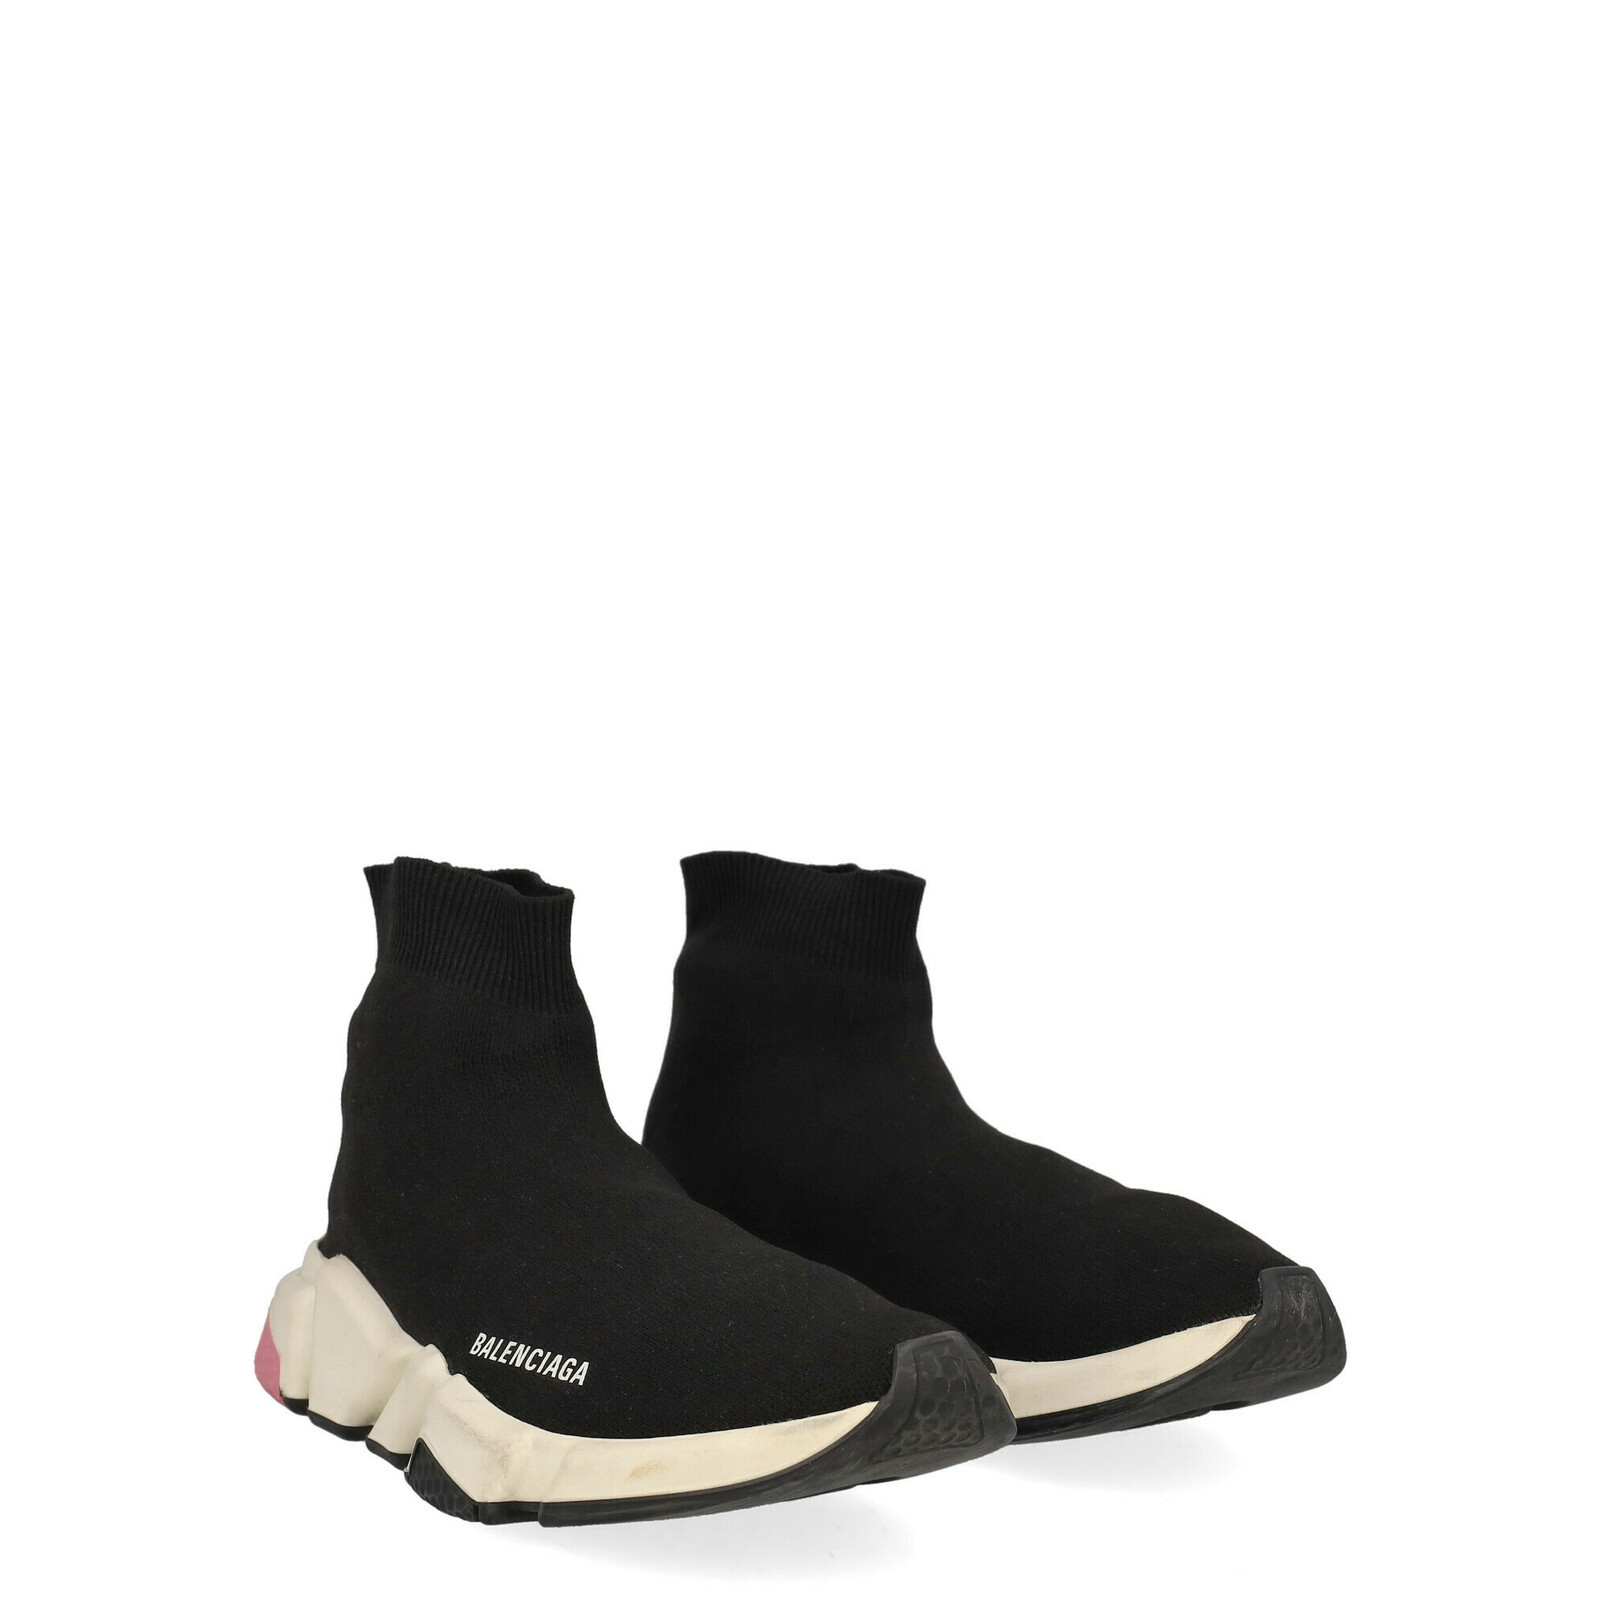 Balenciaga Speed Sock Sneakers in Black Second Hand Balenciaga Speed Sock in Black buy used for 470€ (7214477)